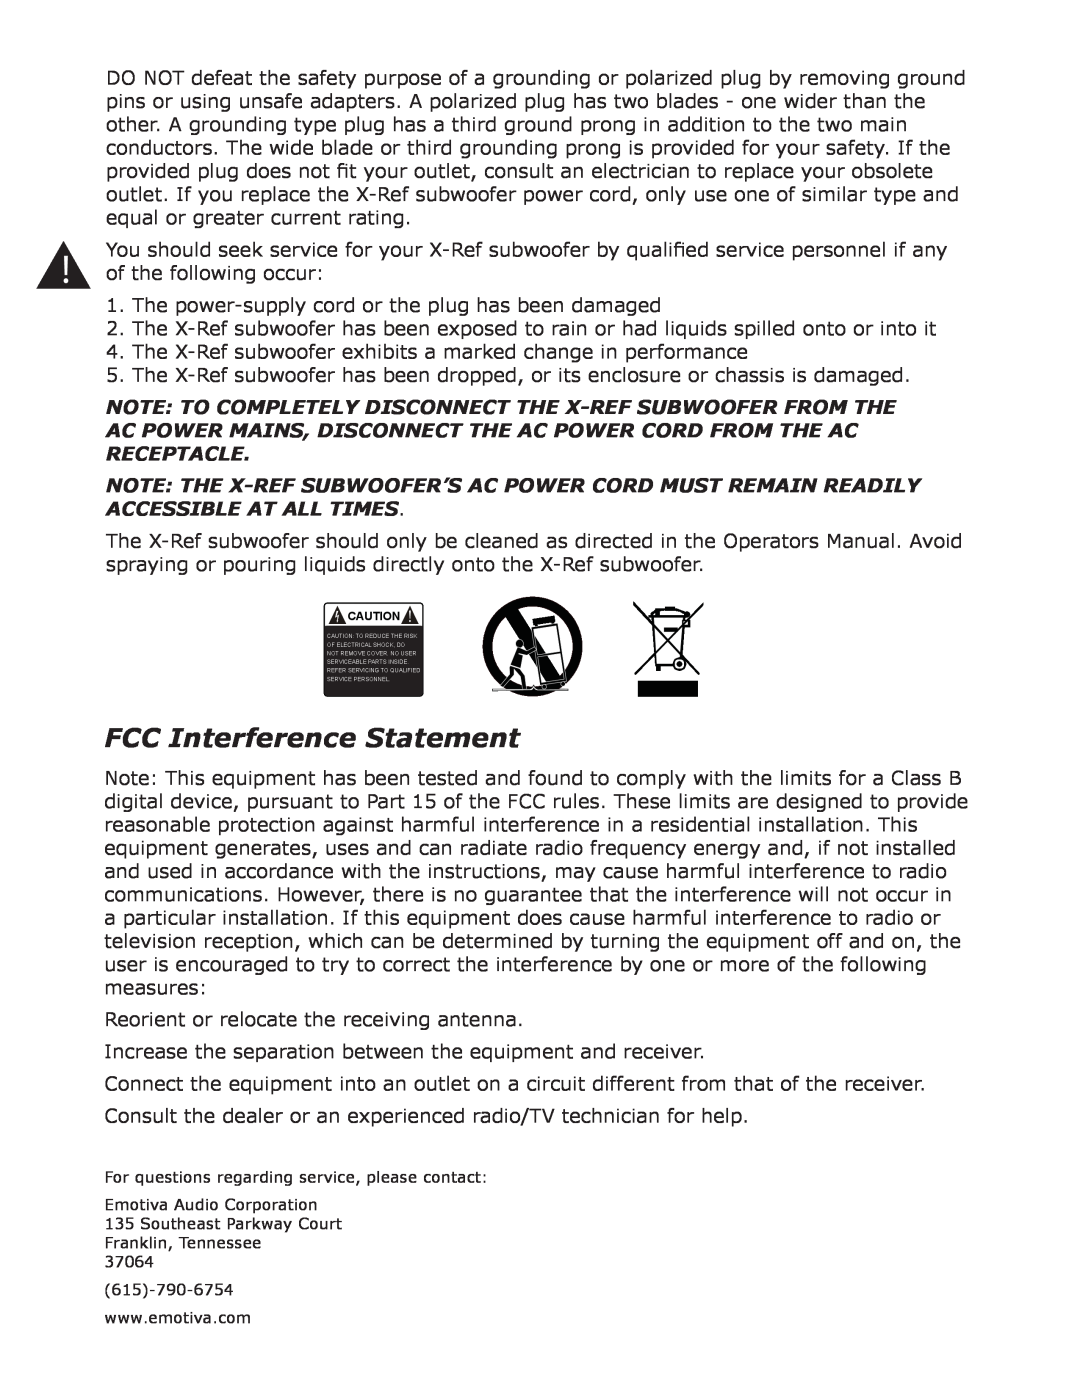 Emotiva X-Ref 10 user manual FCC Interference Statement 